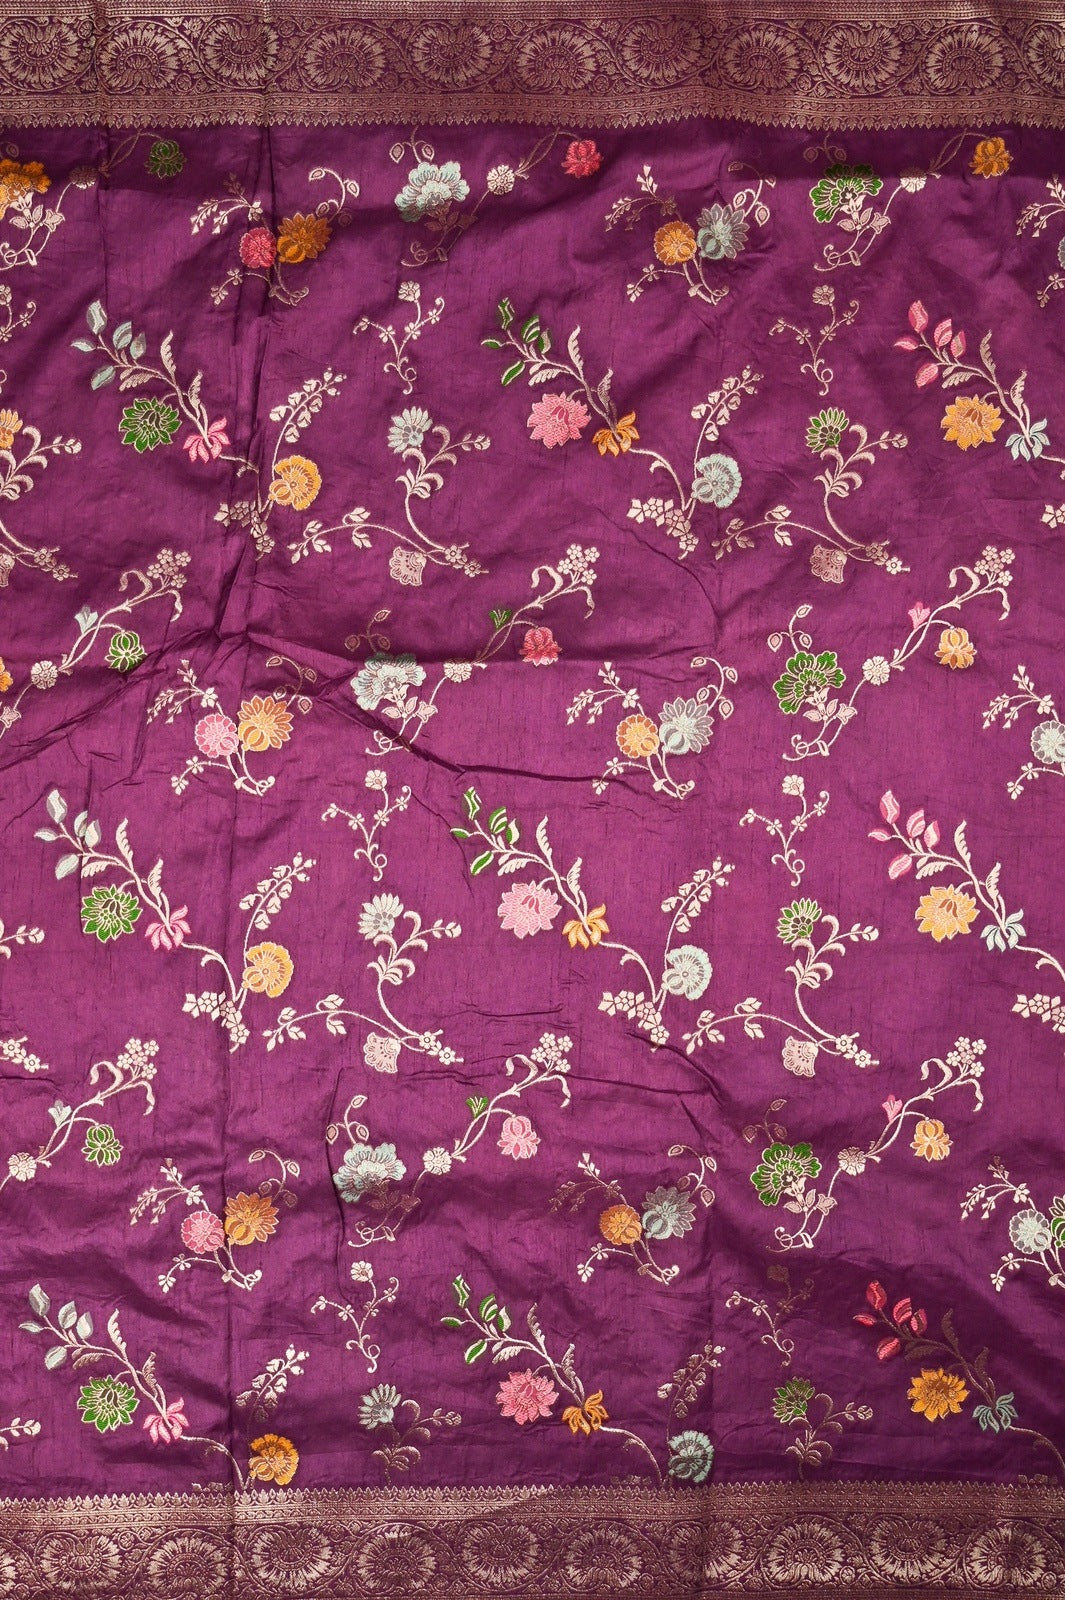 Dola silk saree plum color with allover zari work, rich pallu, small zari border and running plain blouse.